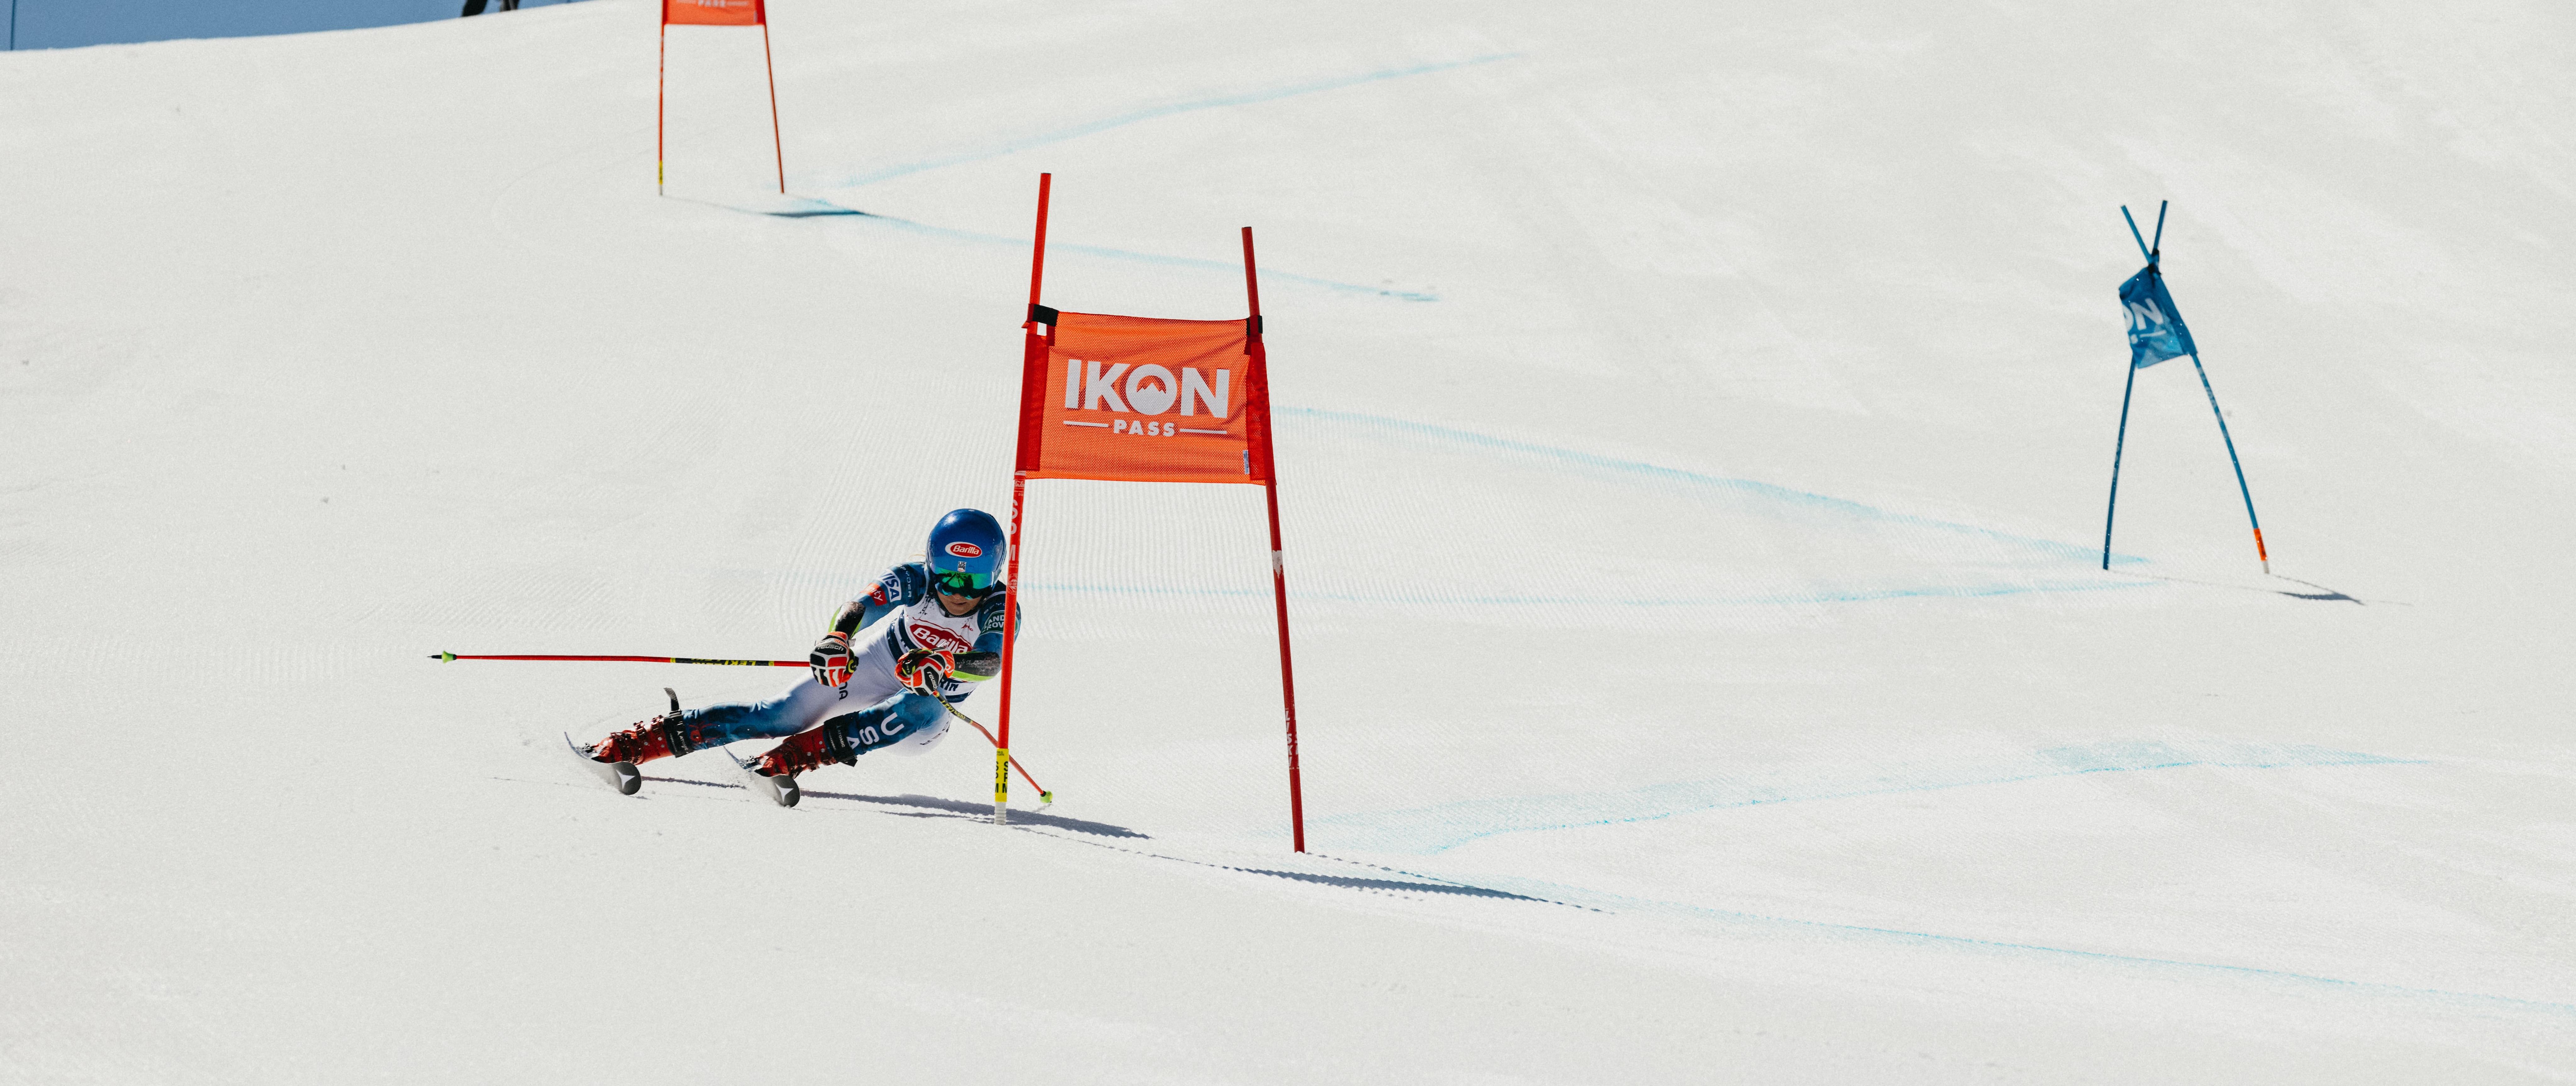 World champion skier Mikaela Shiffrin competing in a slalom race